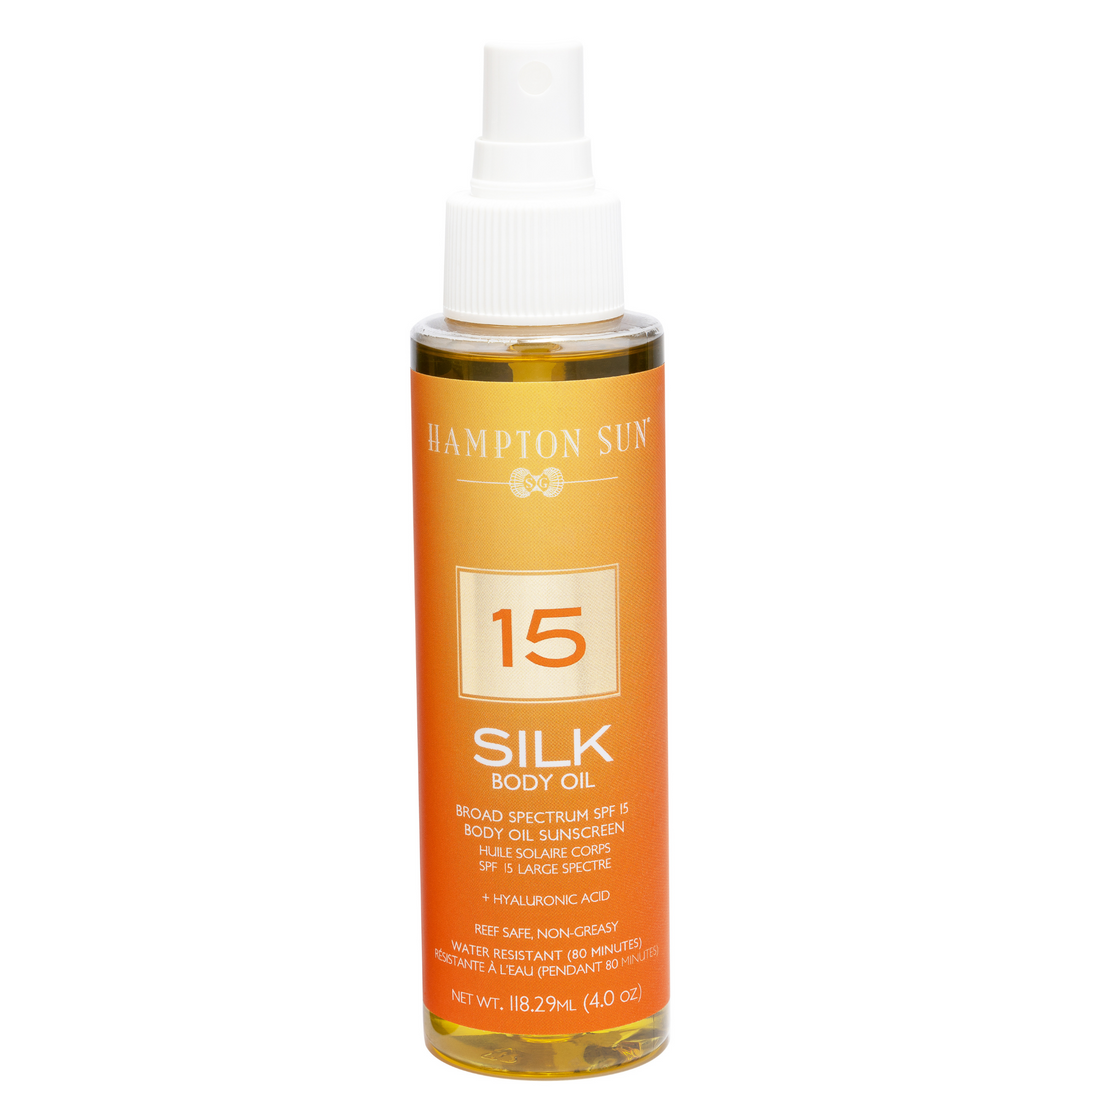 SILK Body Oil - SPF 15